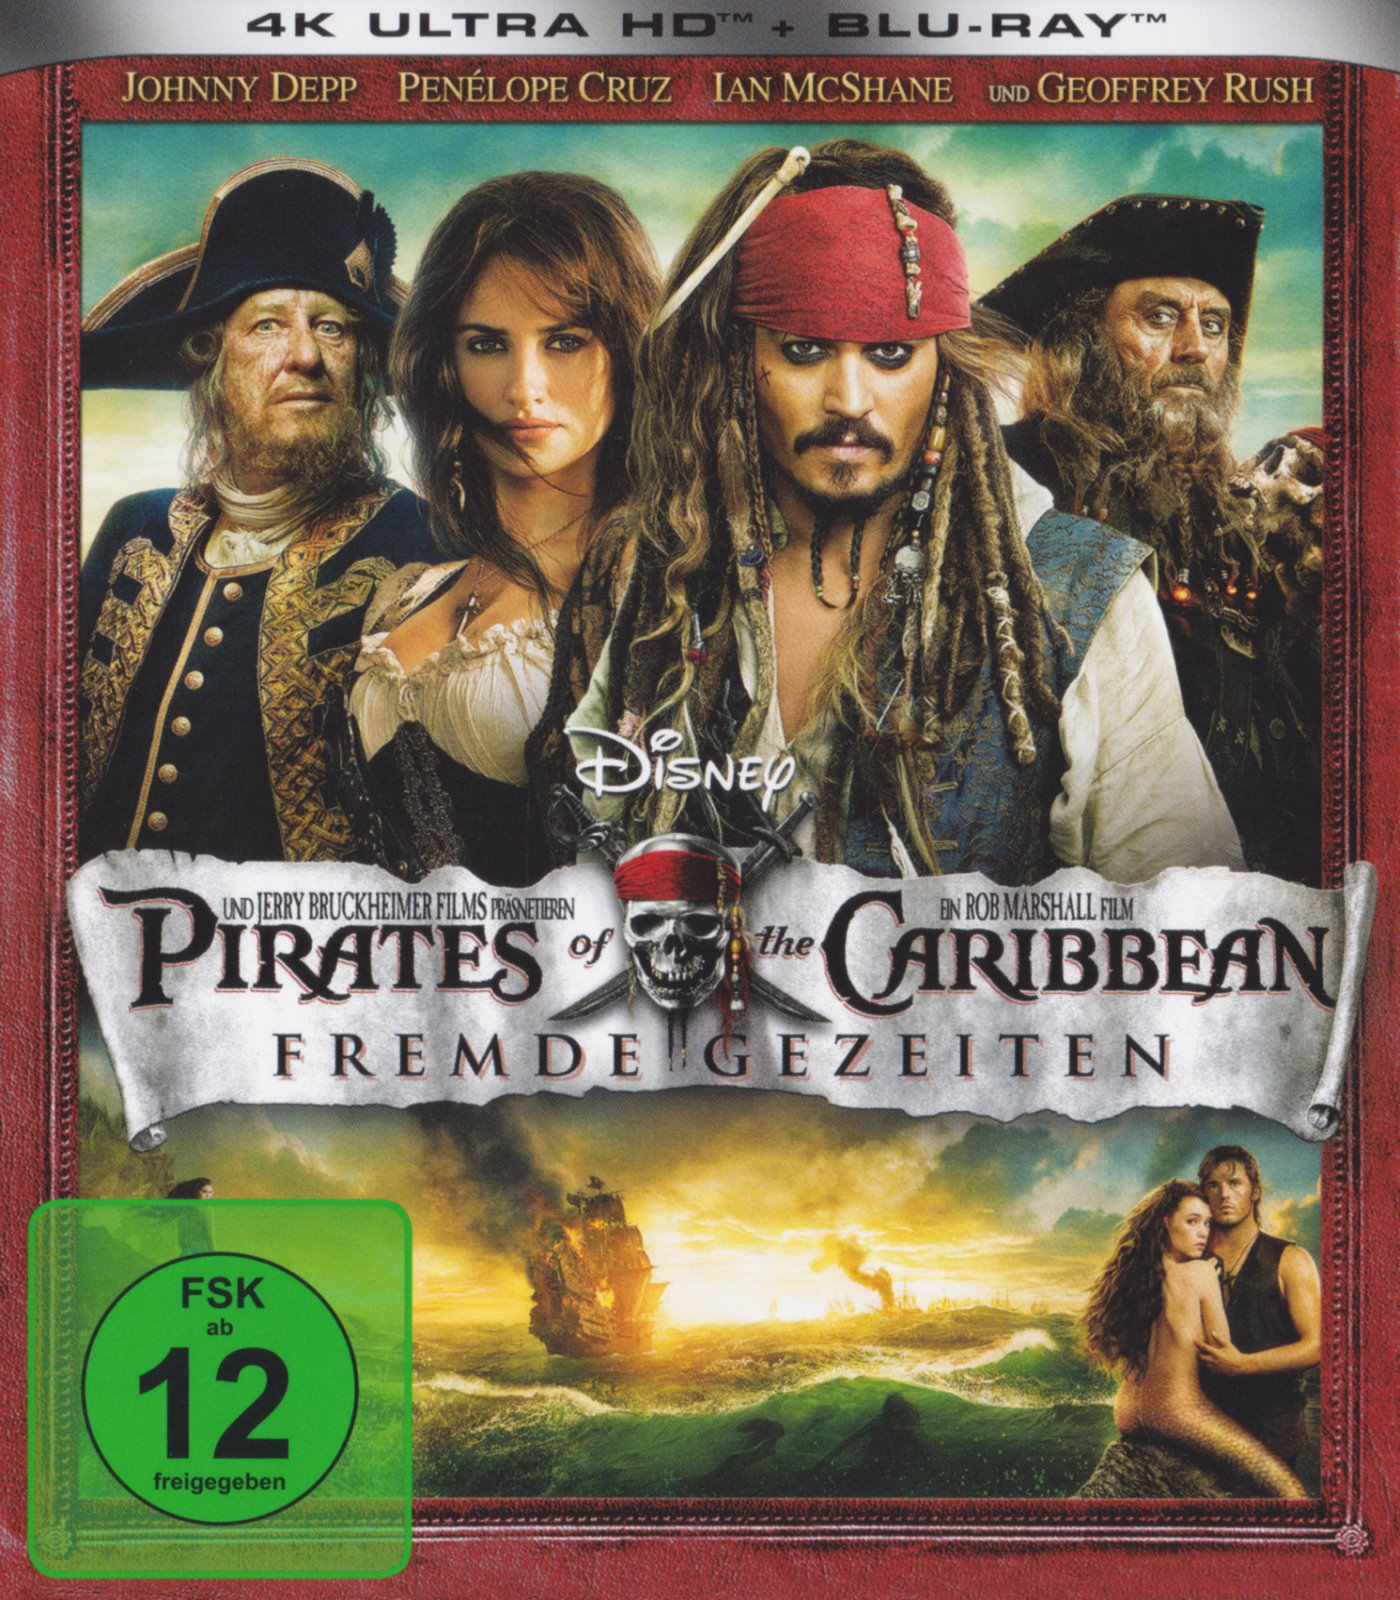 Cover - Pirates of the Caribbean - Fremde Gezeiten.jpg